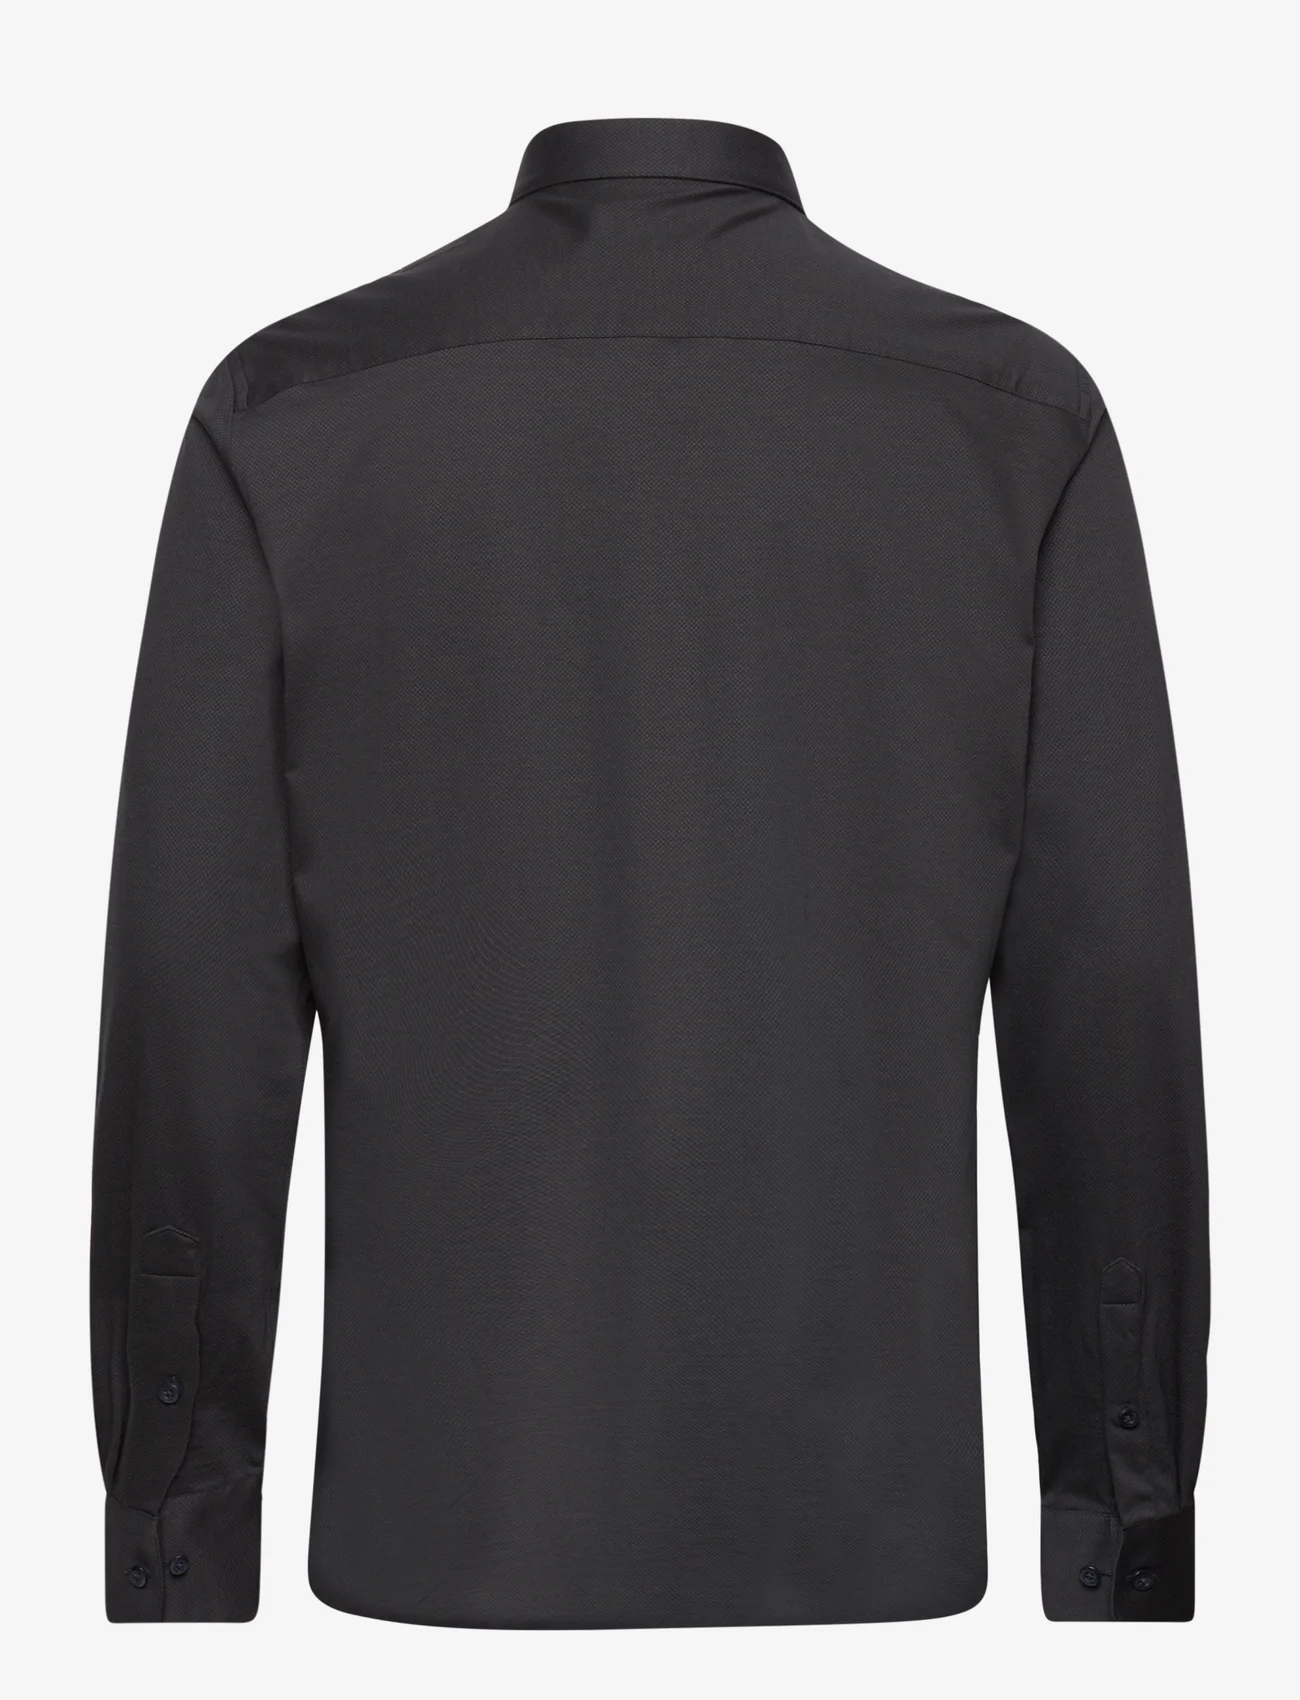 Matinique - MAmarc N - basic skjorter - black - 1